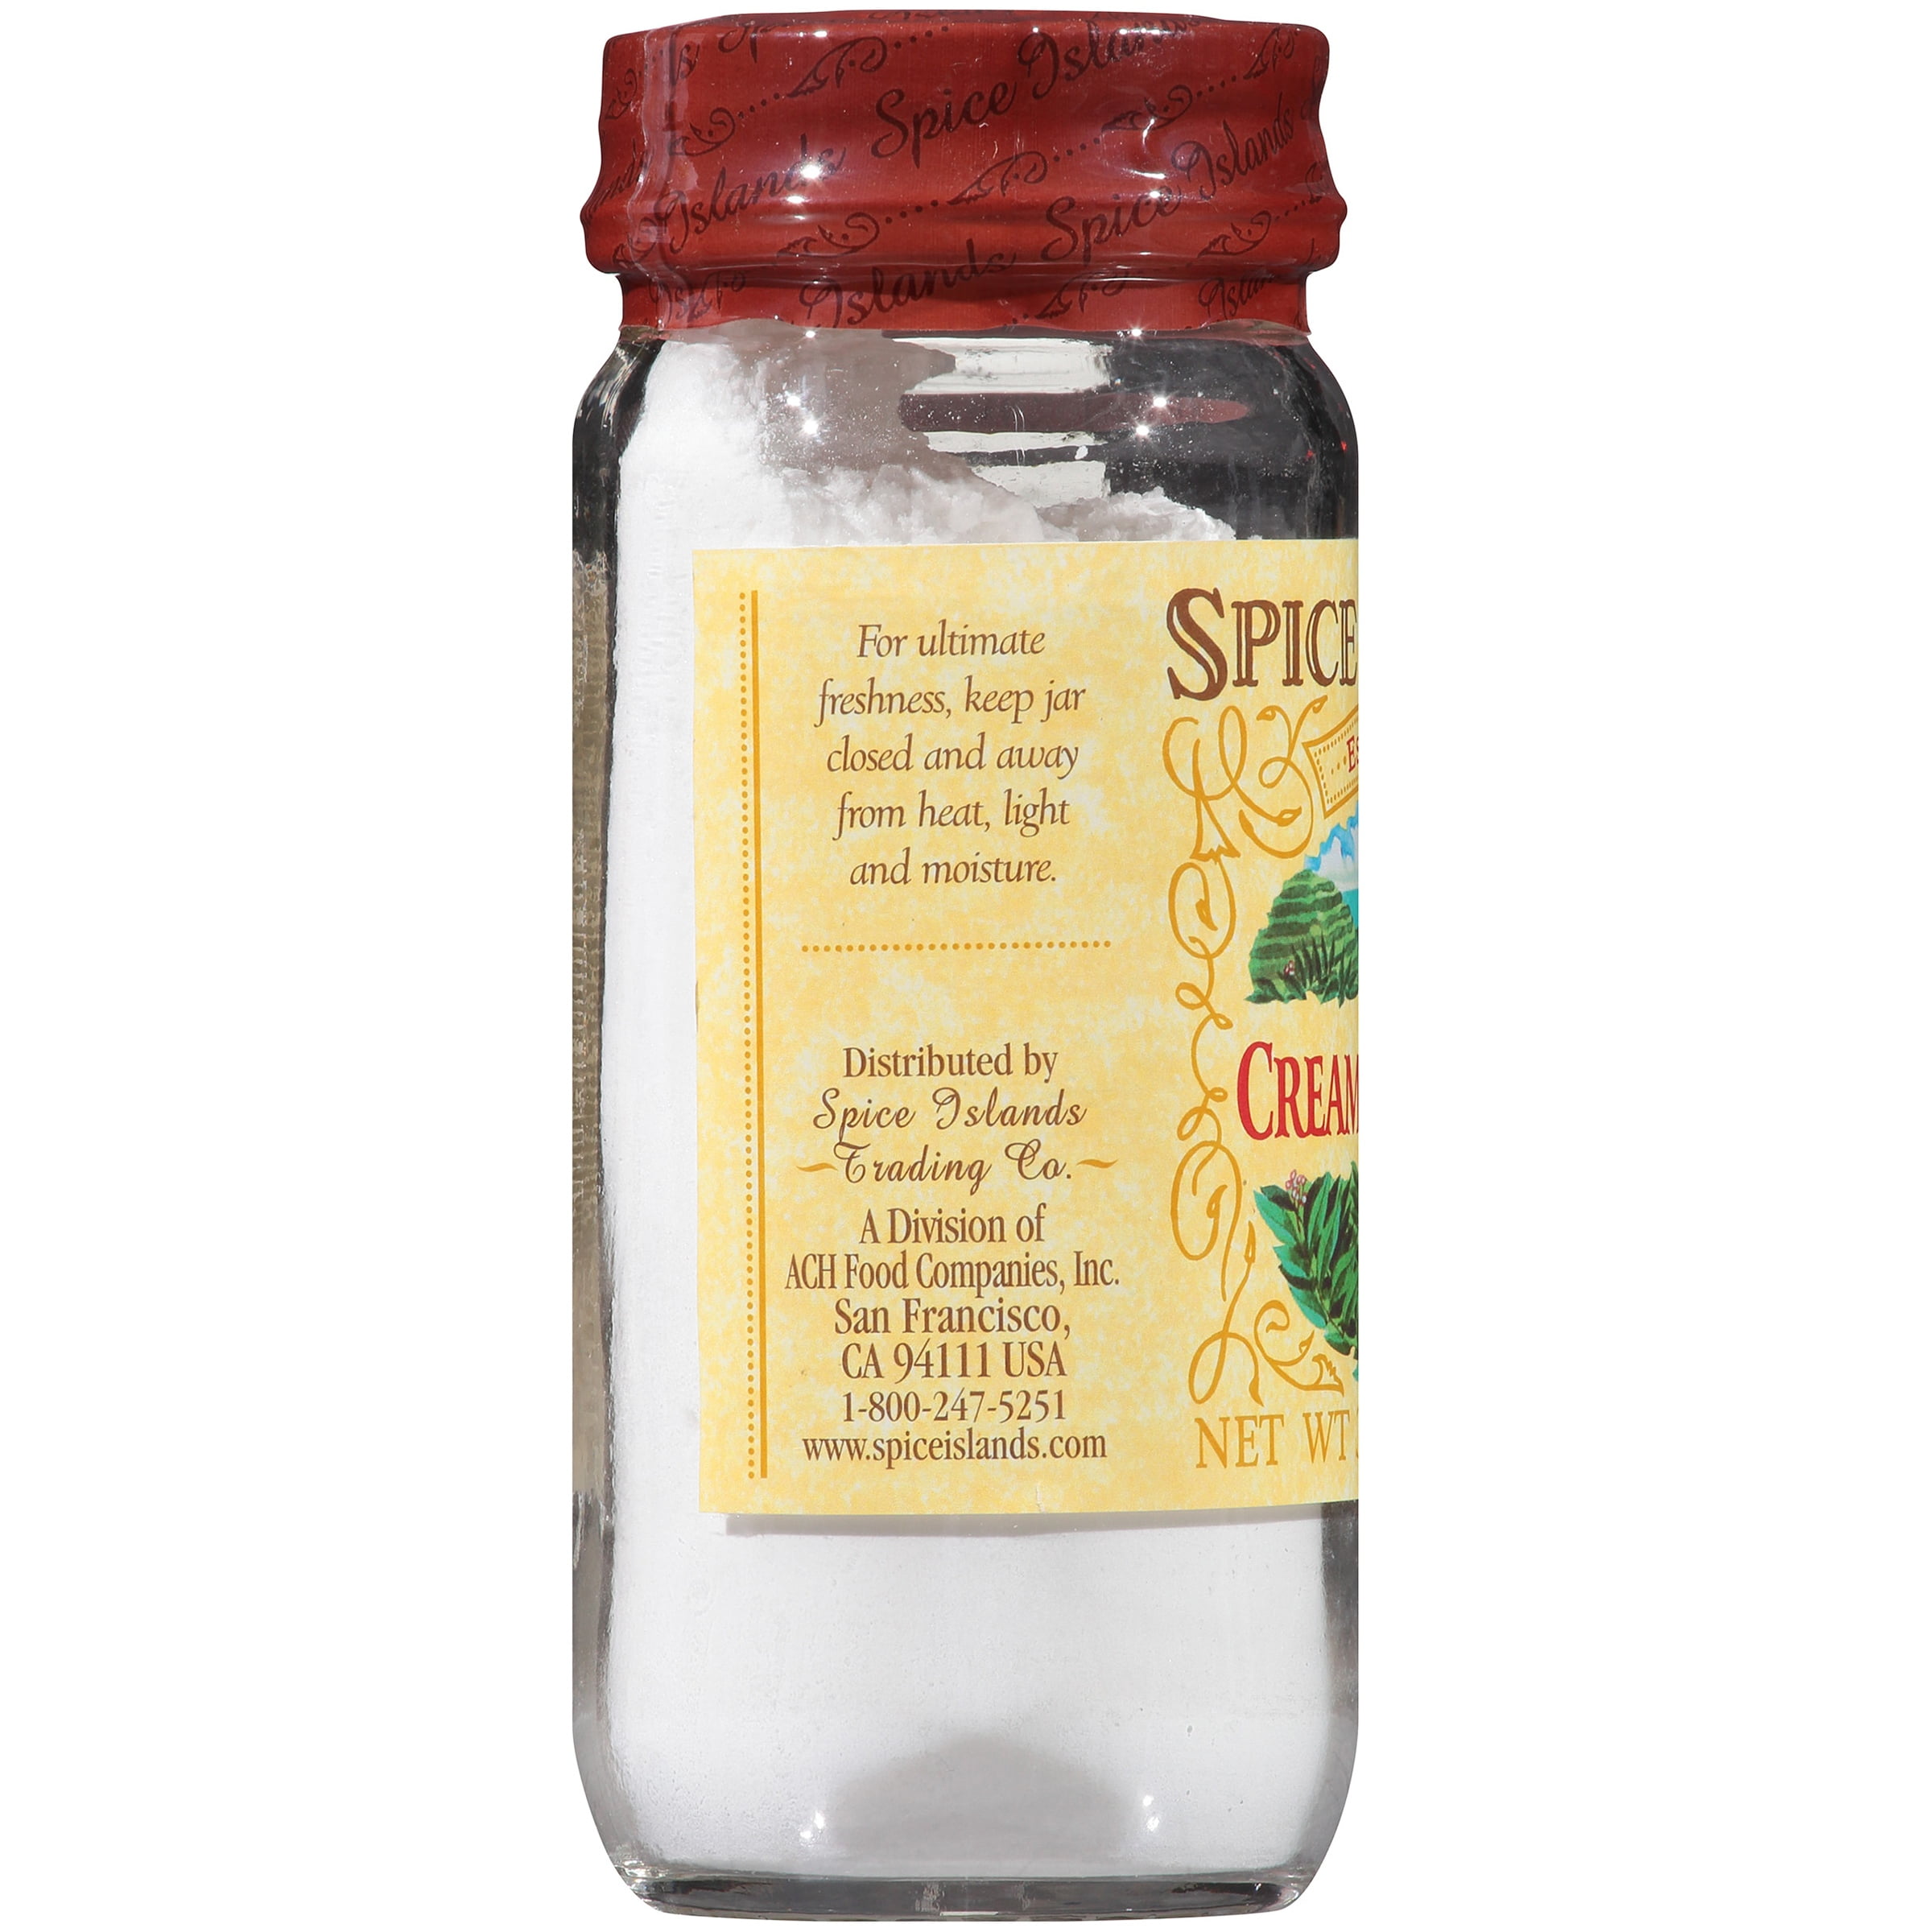 Cream of Tartar - Southern New England Spice Company